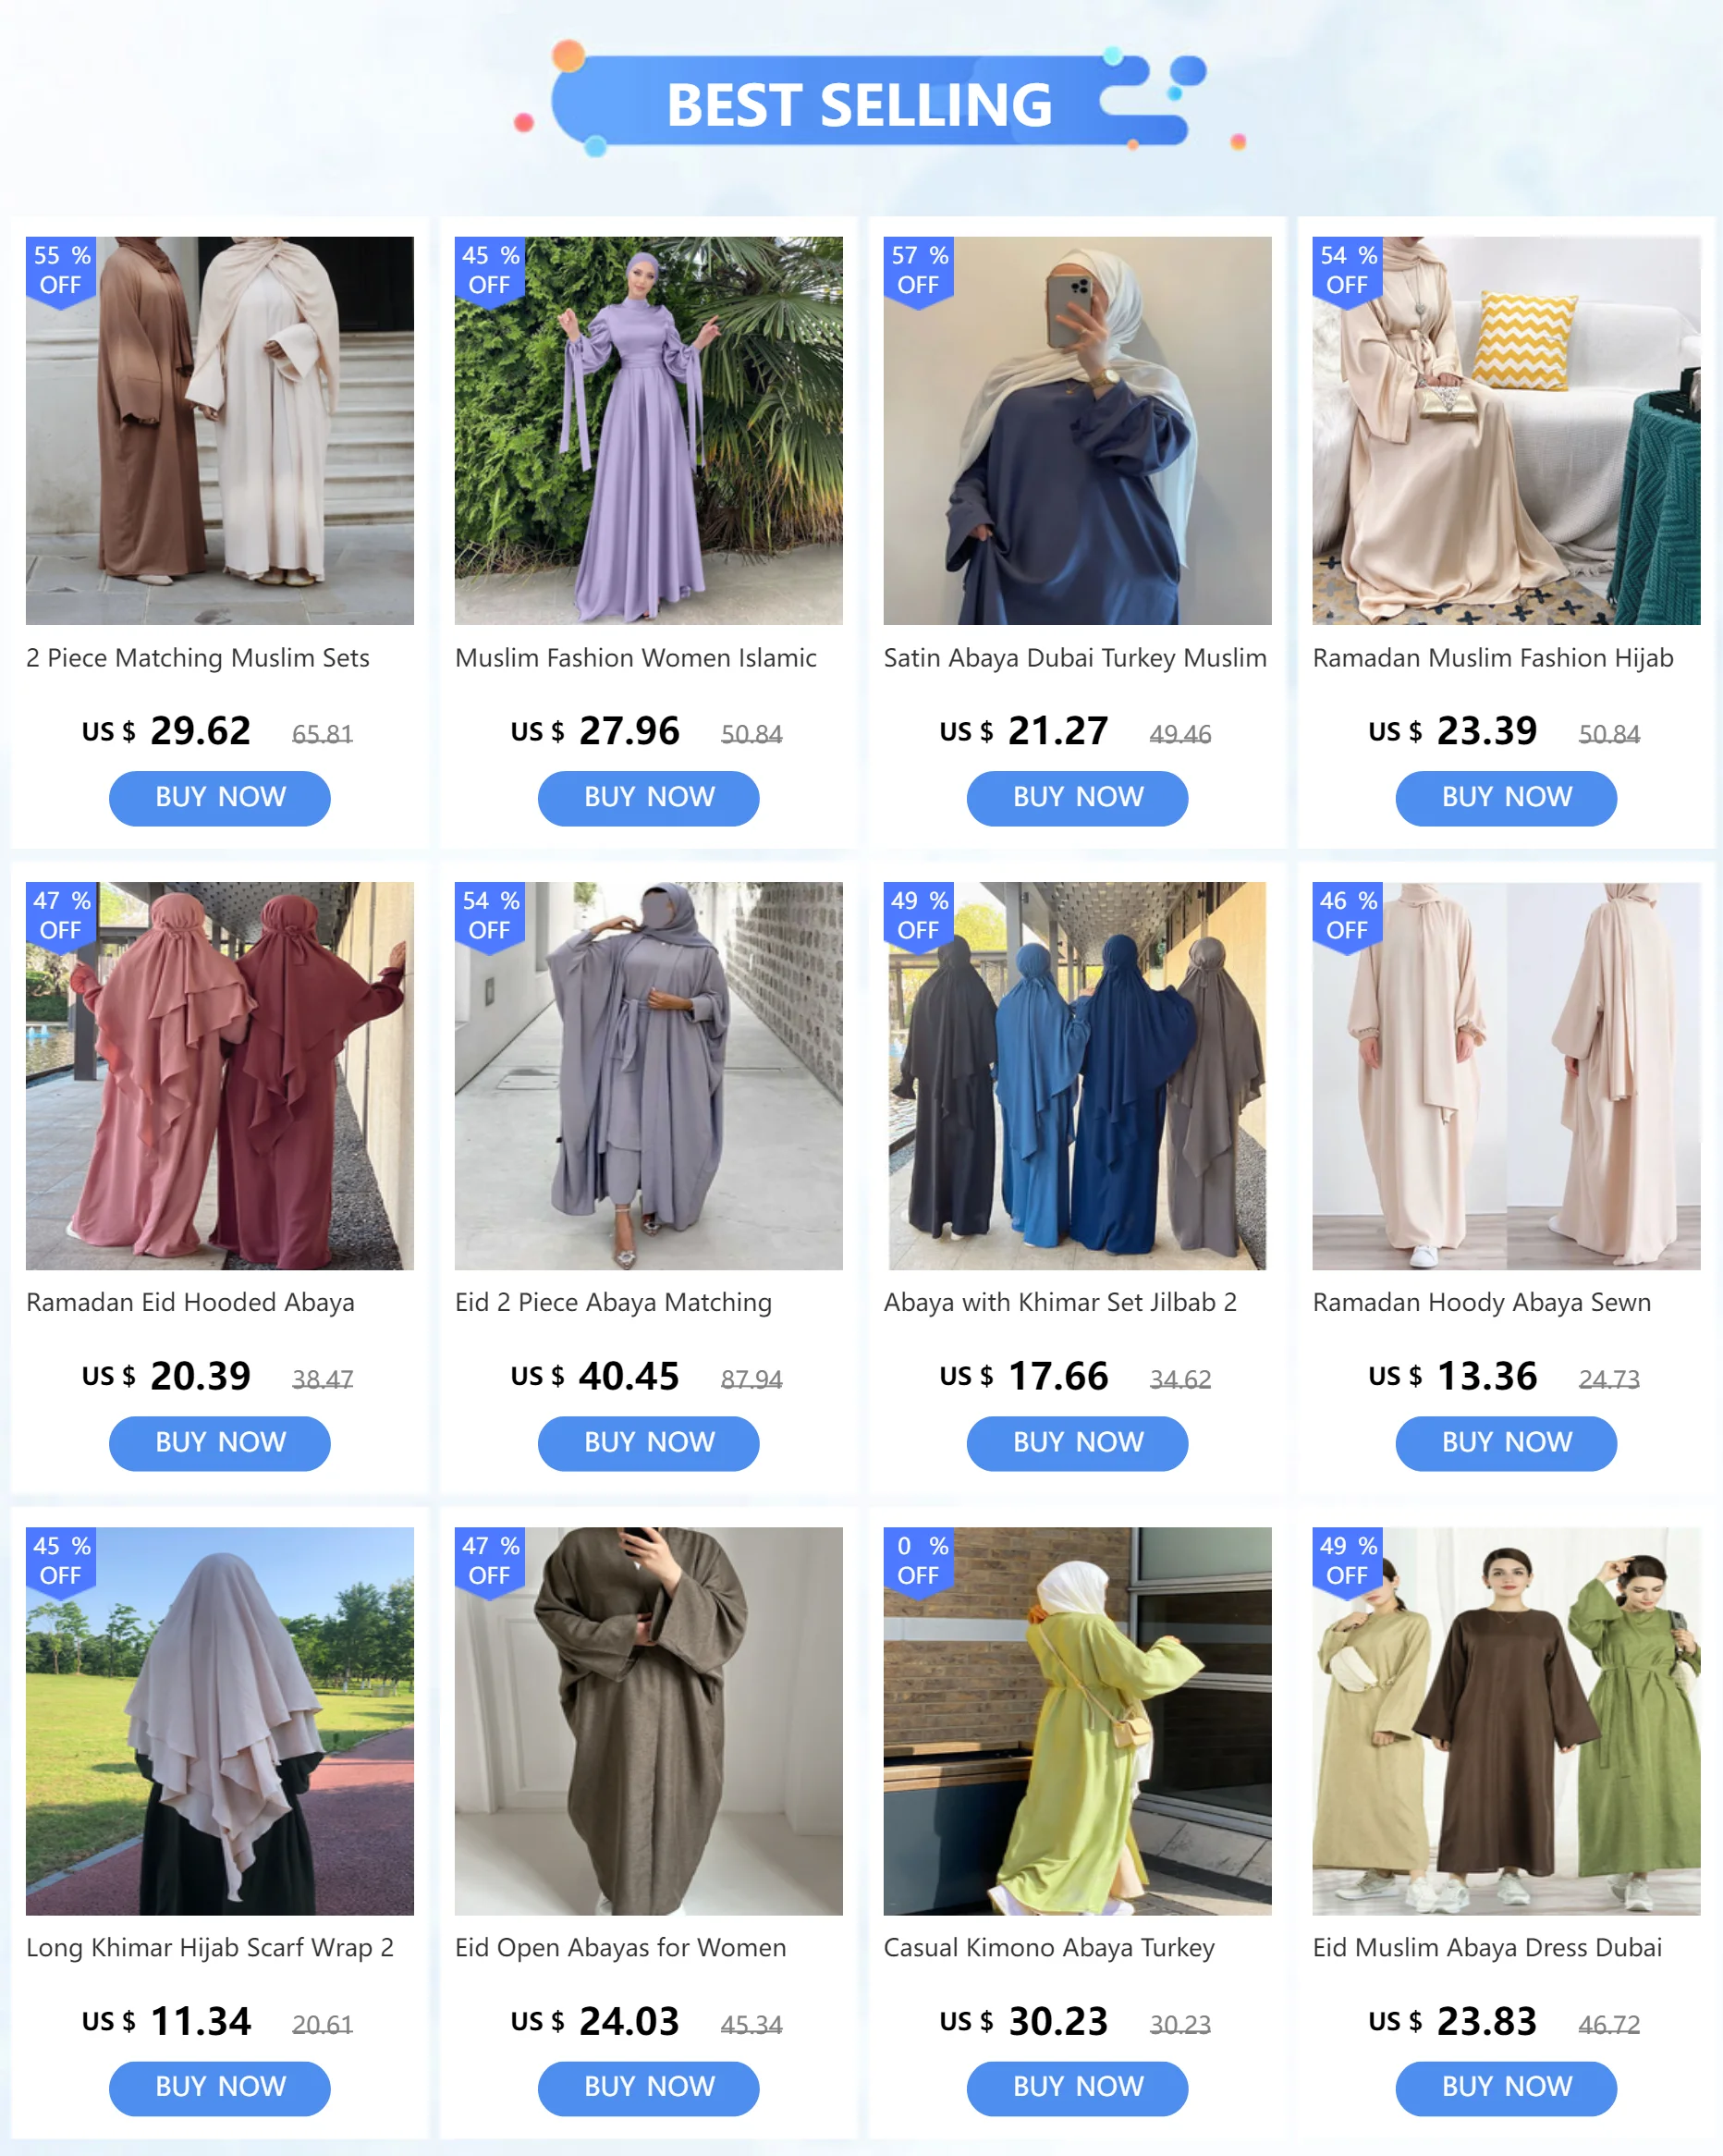 Eid 2 Piece Abaya Matching Muslim Sets Hijab Dress Open Abayas for Women Dubai Turkey Short Sleeve Inner Dresses African Islam